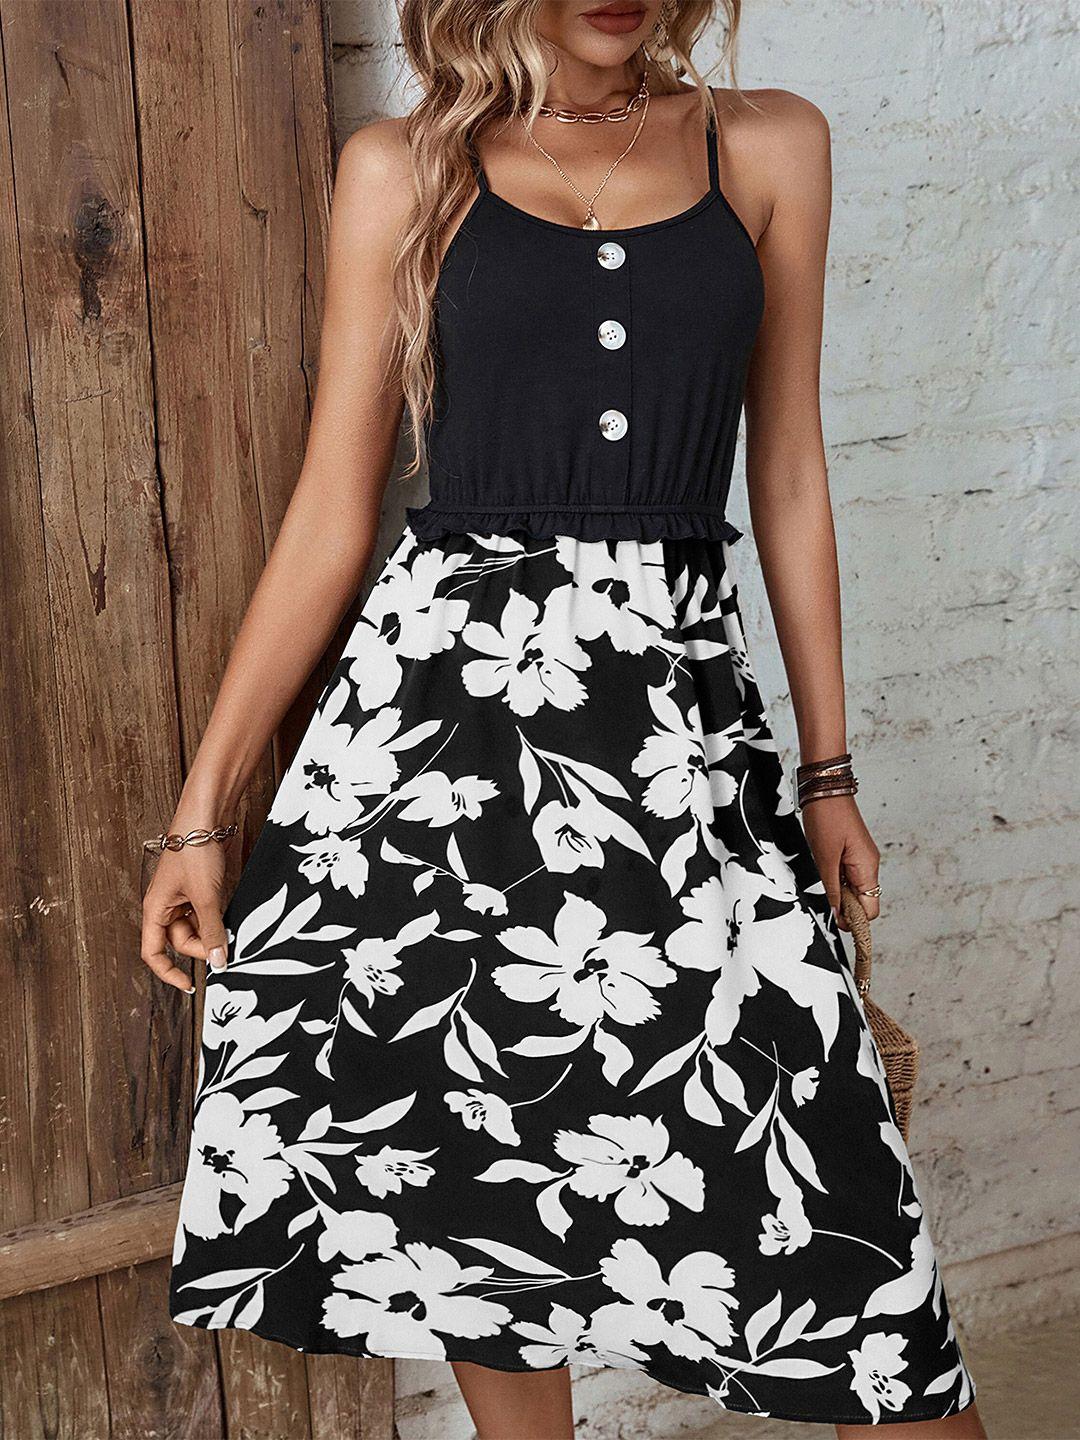 stylecast black floral printed shoulder straps monochrome a-line dress